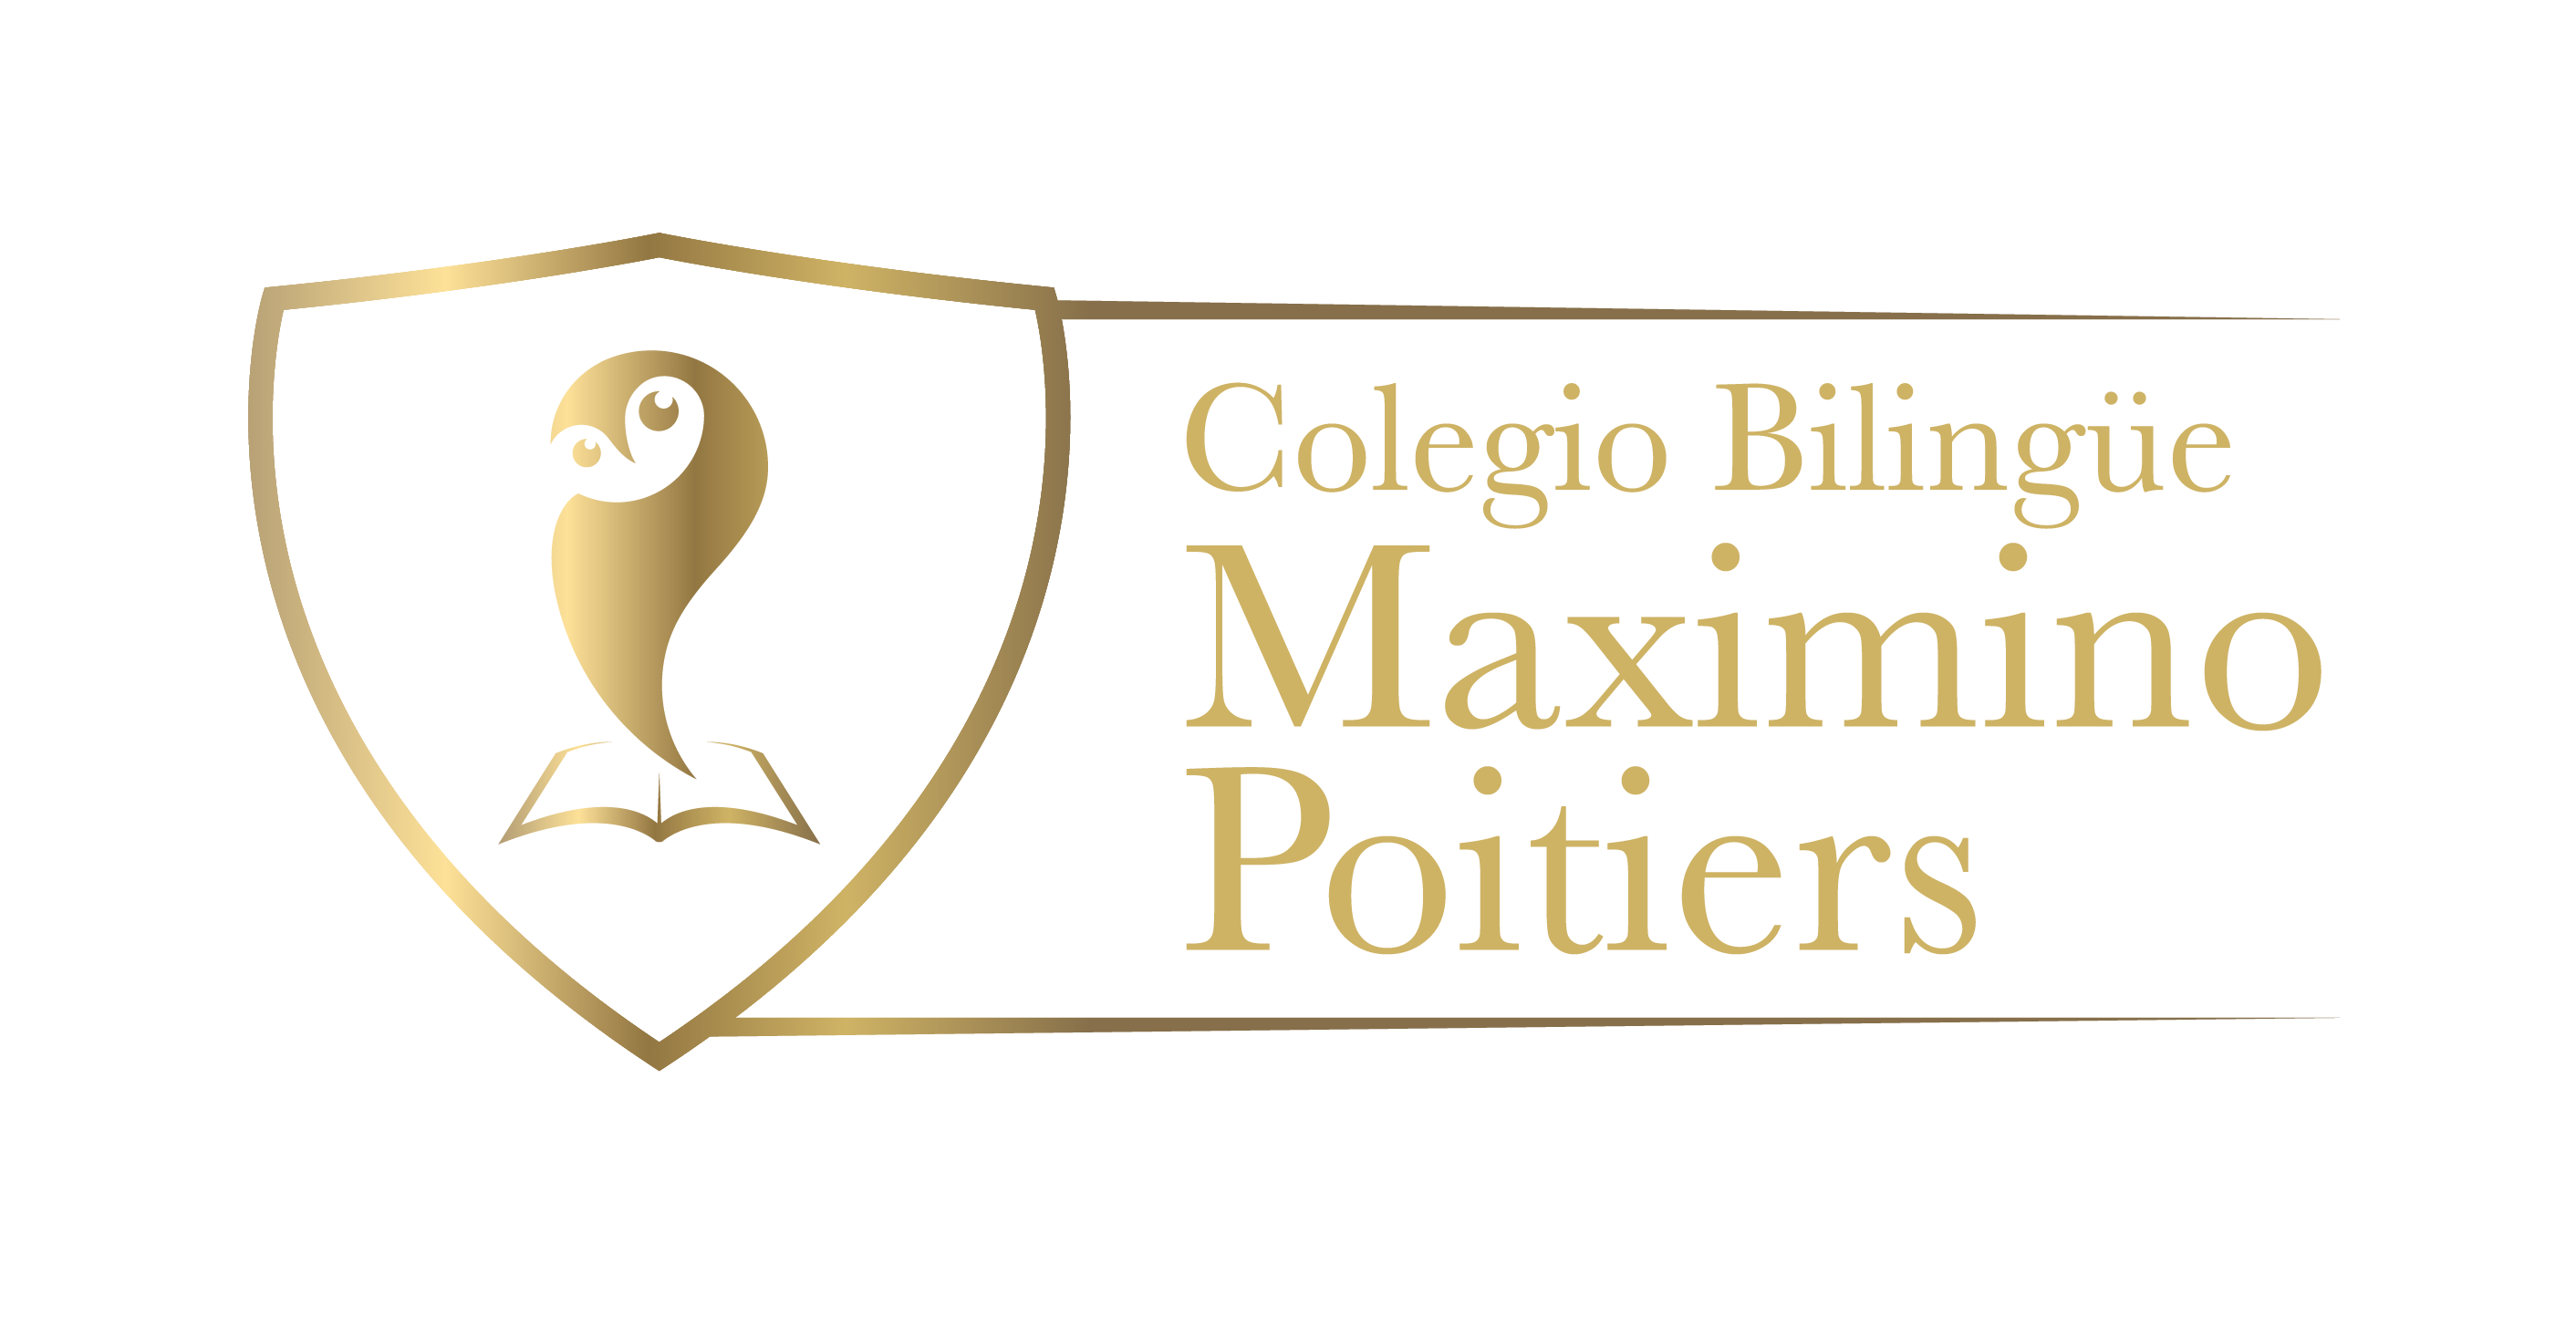 Colombia - Maximinio Poitiers - logo